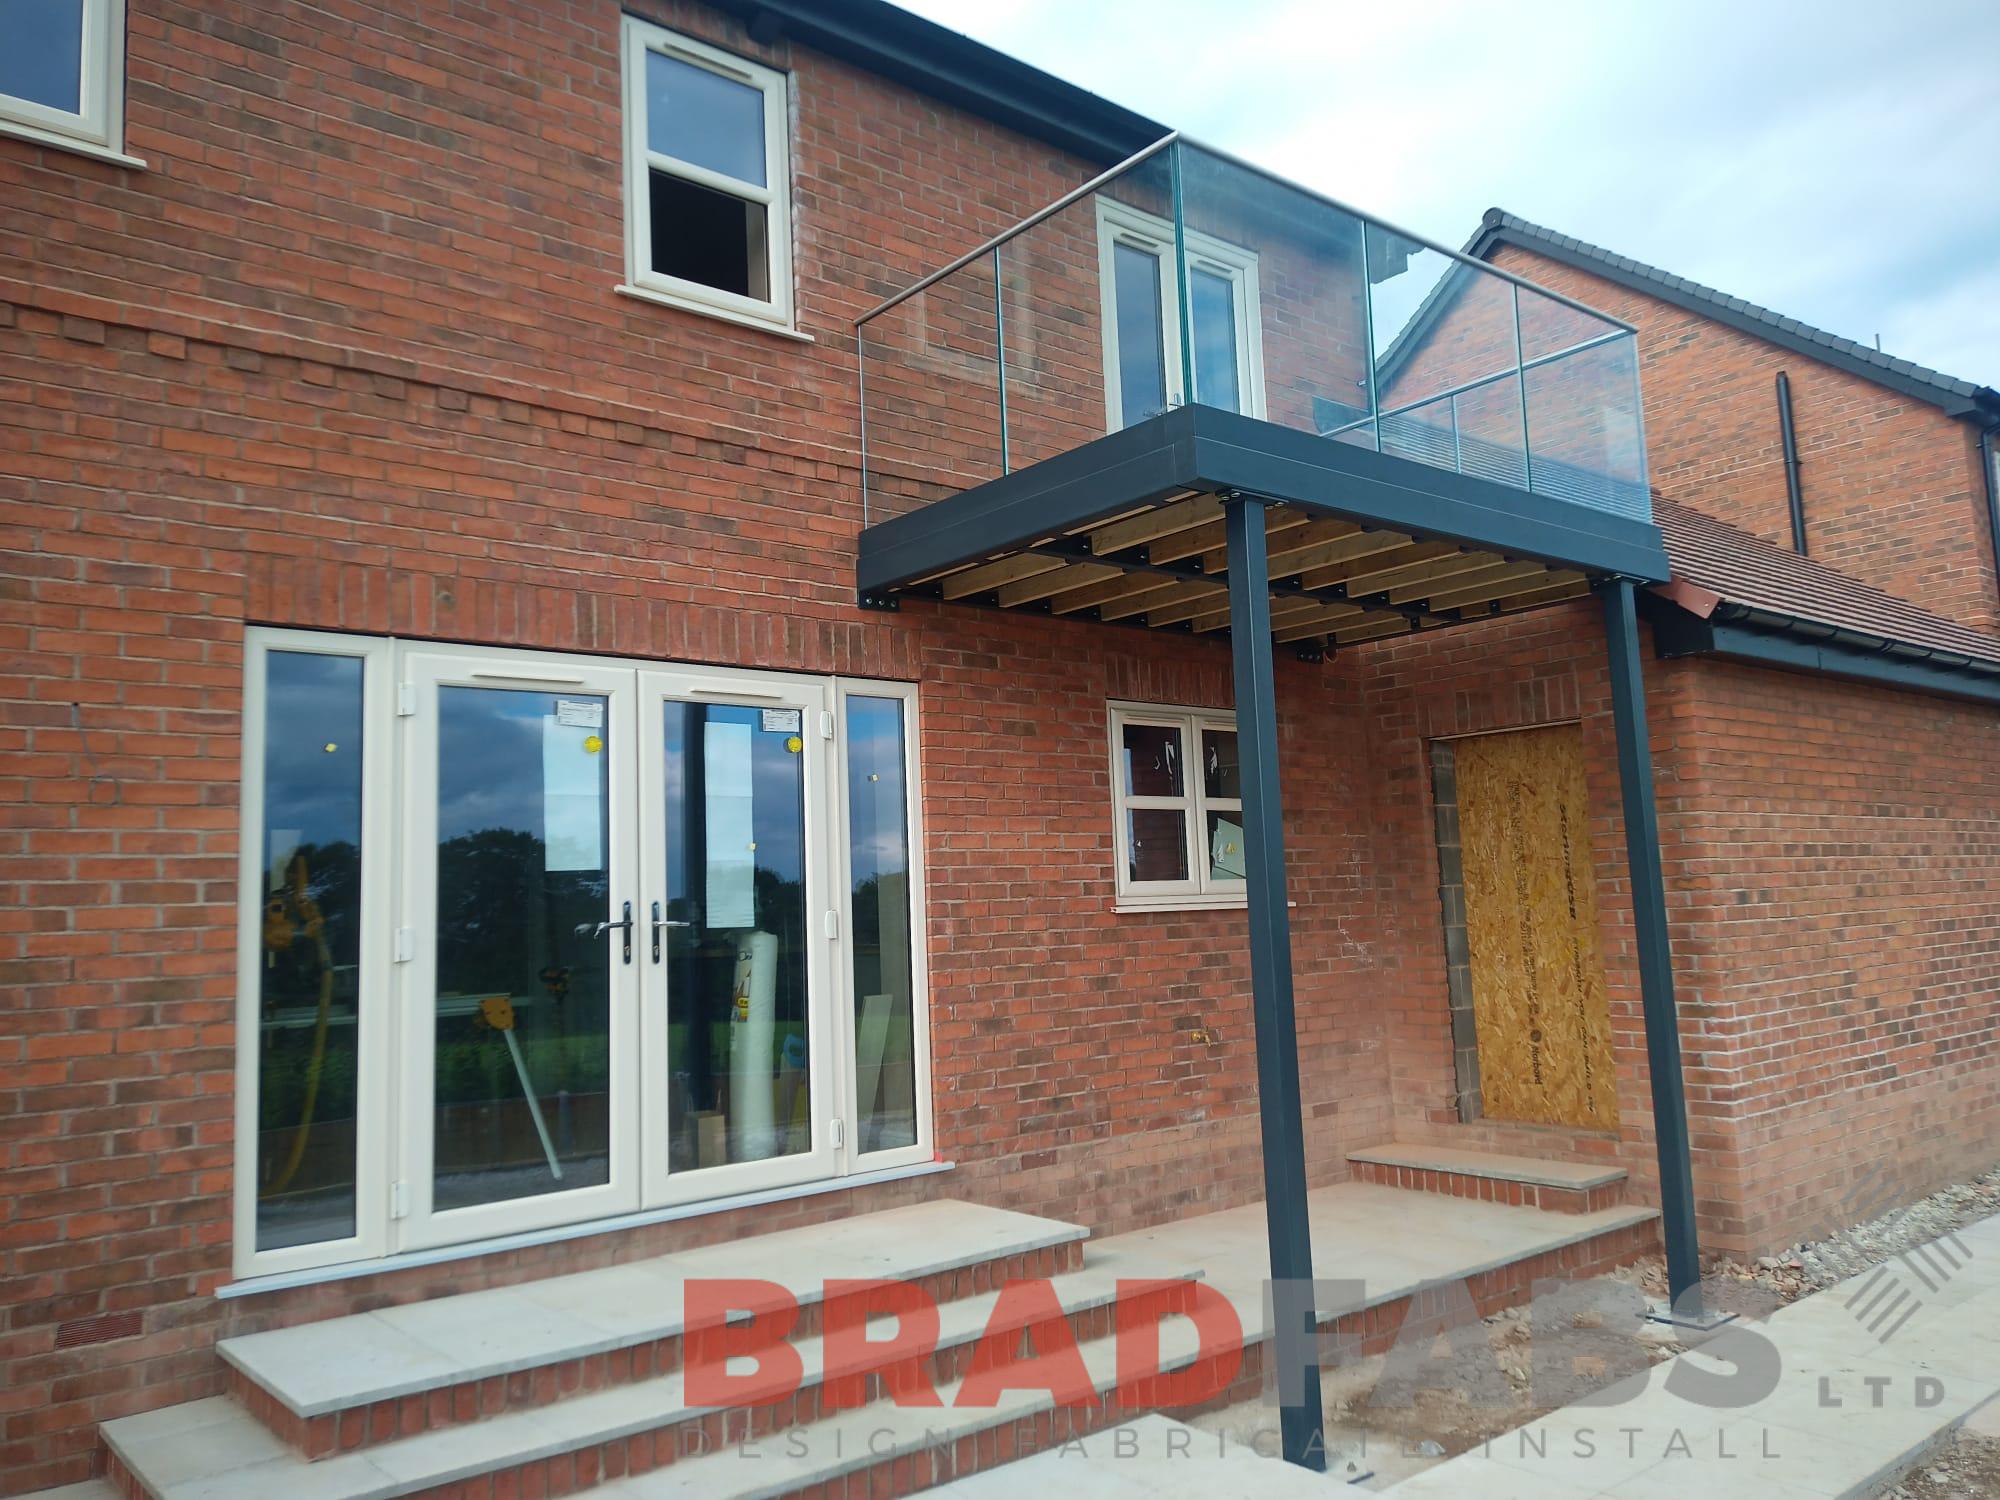 Bradfabs, bespoke balcony, steel balcony, glass balustrade, stainless steel top rail, composite decking 